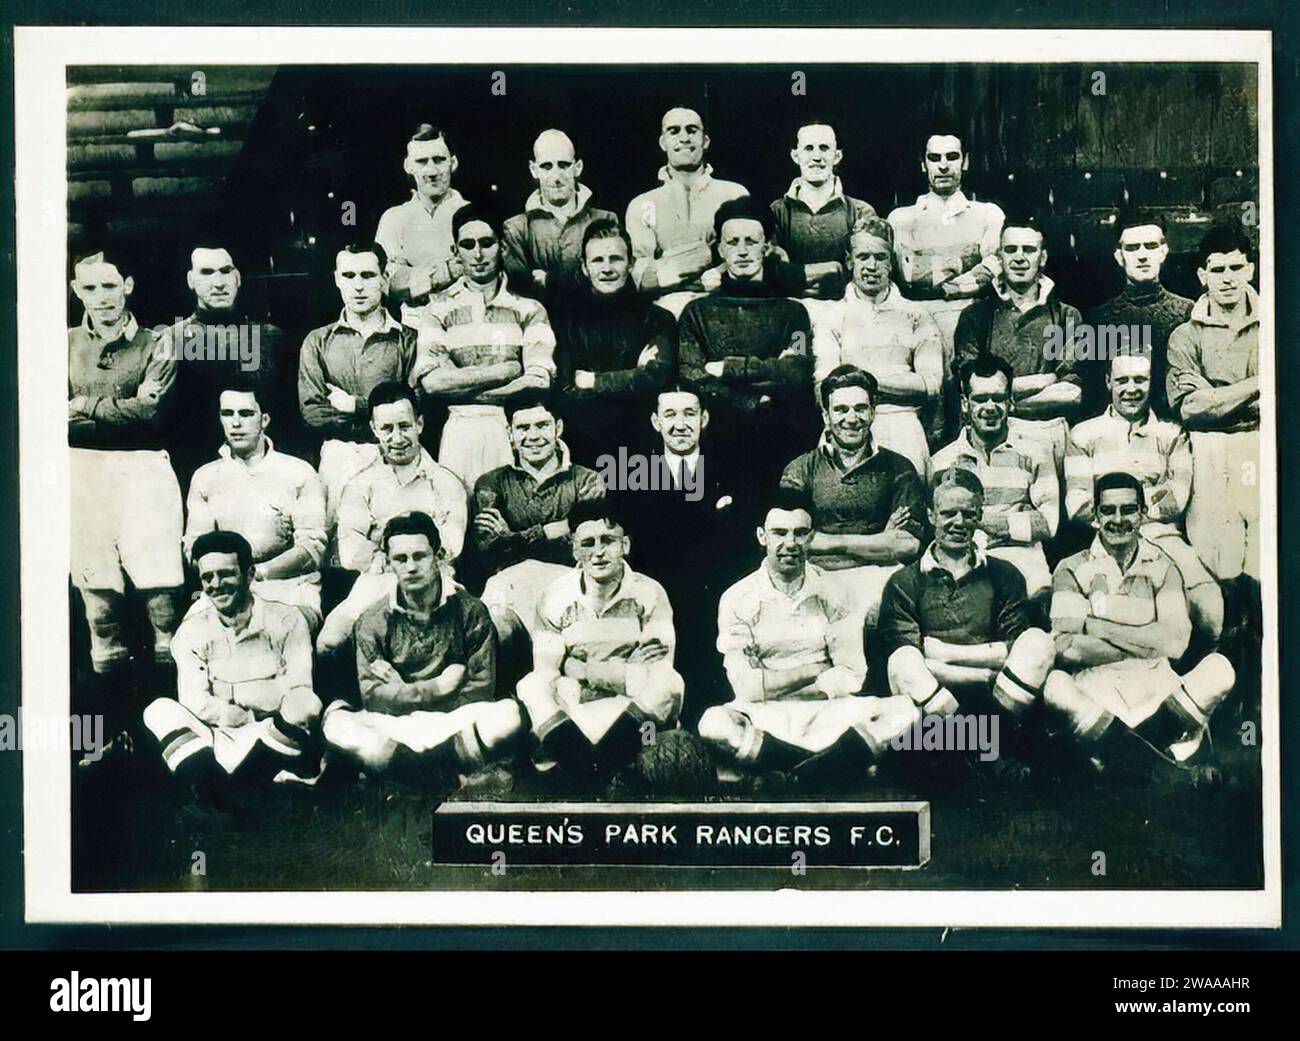 Queens Park Rangers FC - Vintage Cigarette Card Illustration Stock Photo